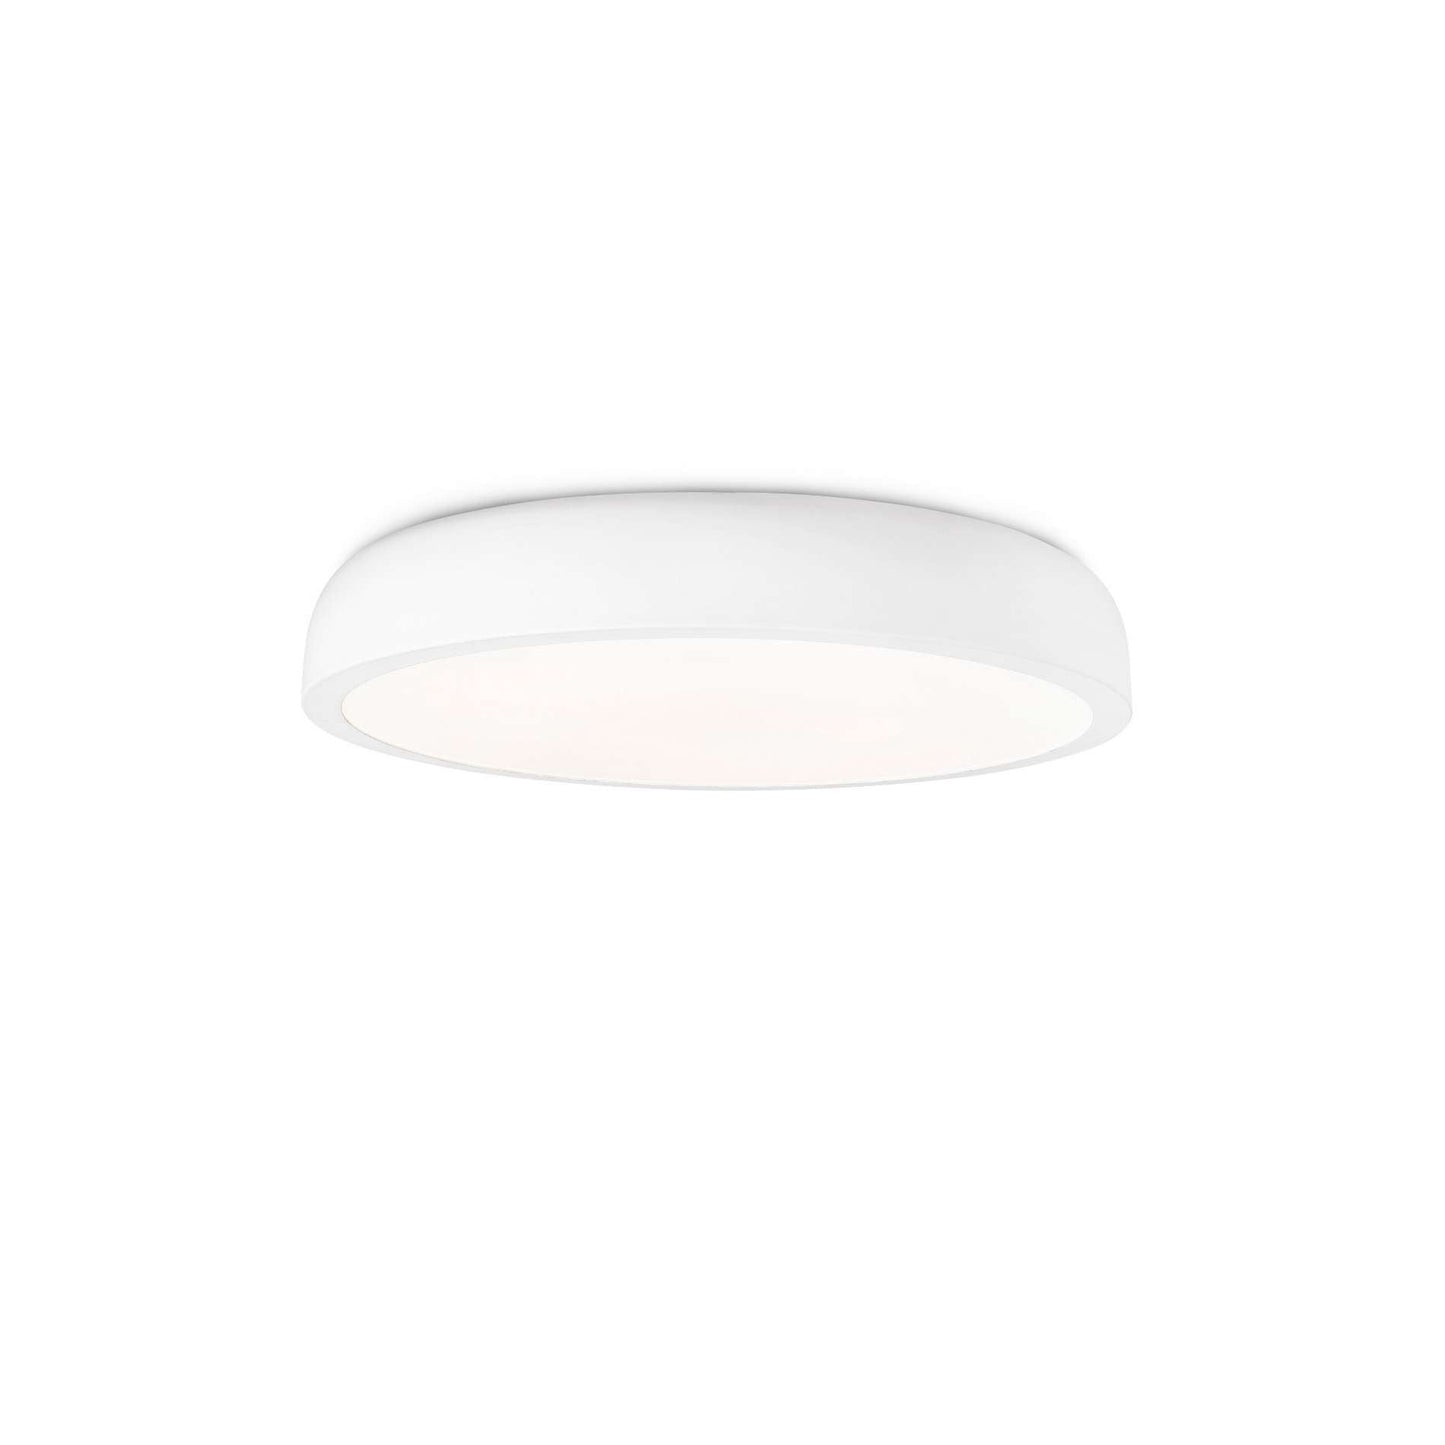 Plafonnier Plafonnier Cocotte LED blanc diamètre 430 mm Faro Lumisign